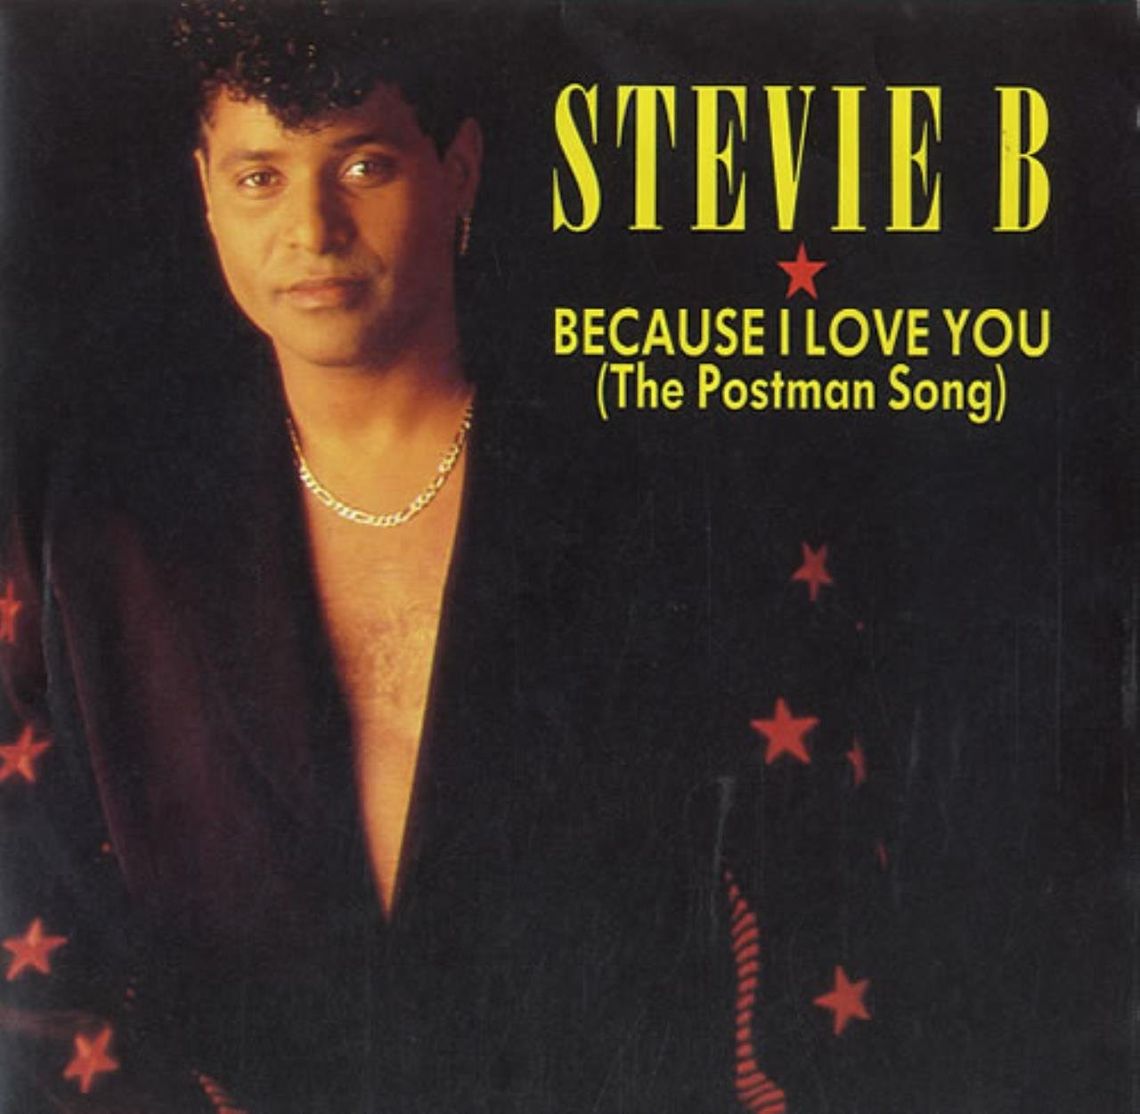 Stevie B "Because I love you"